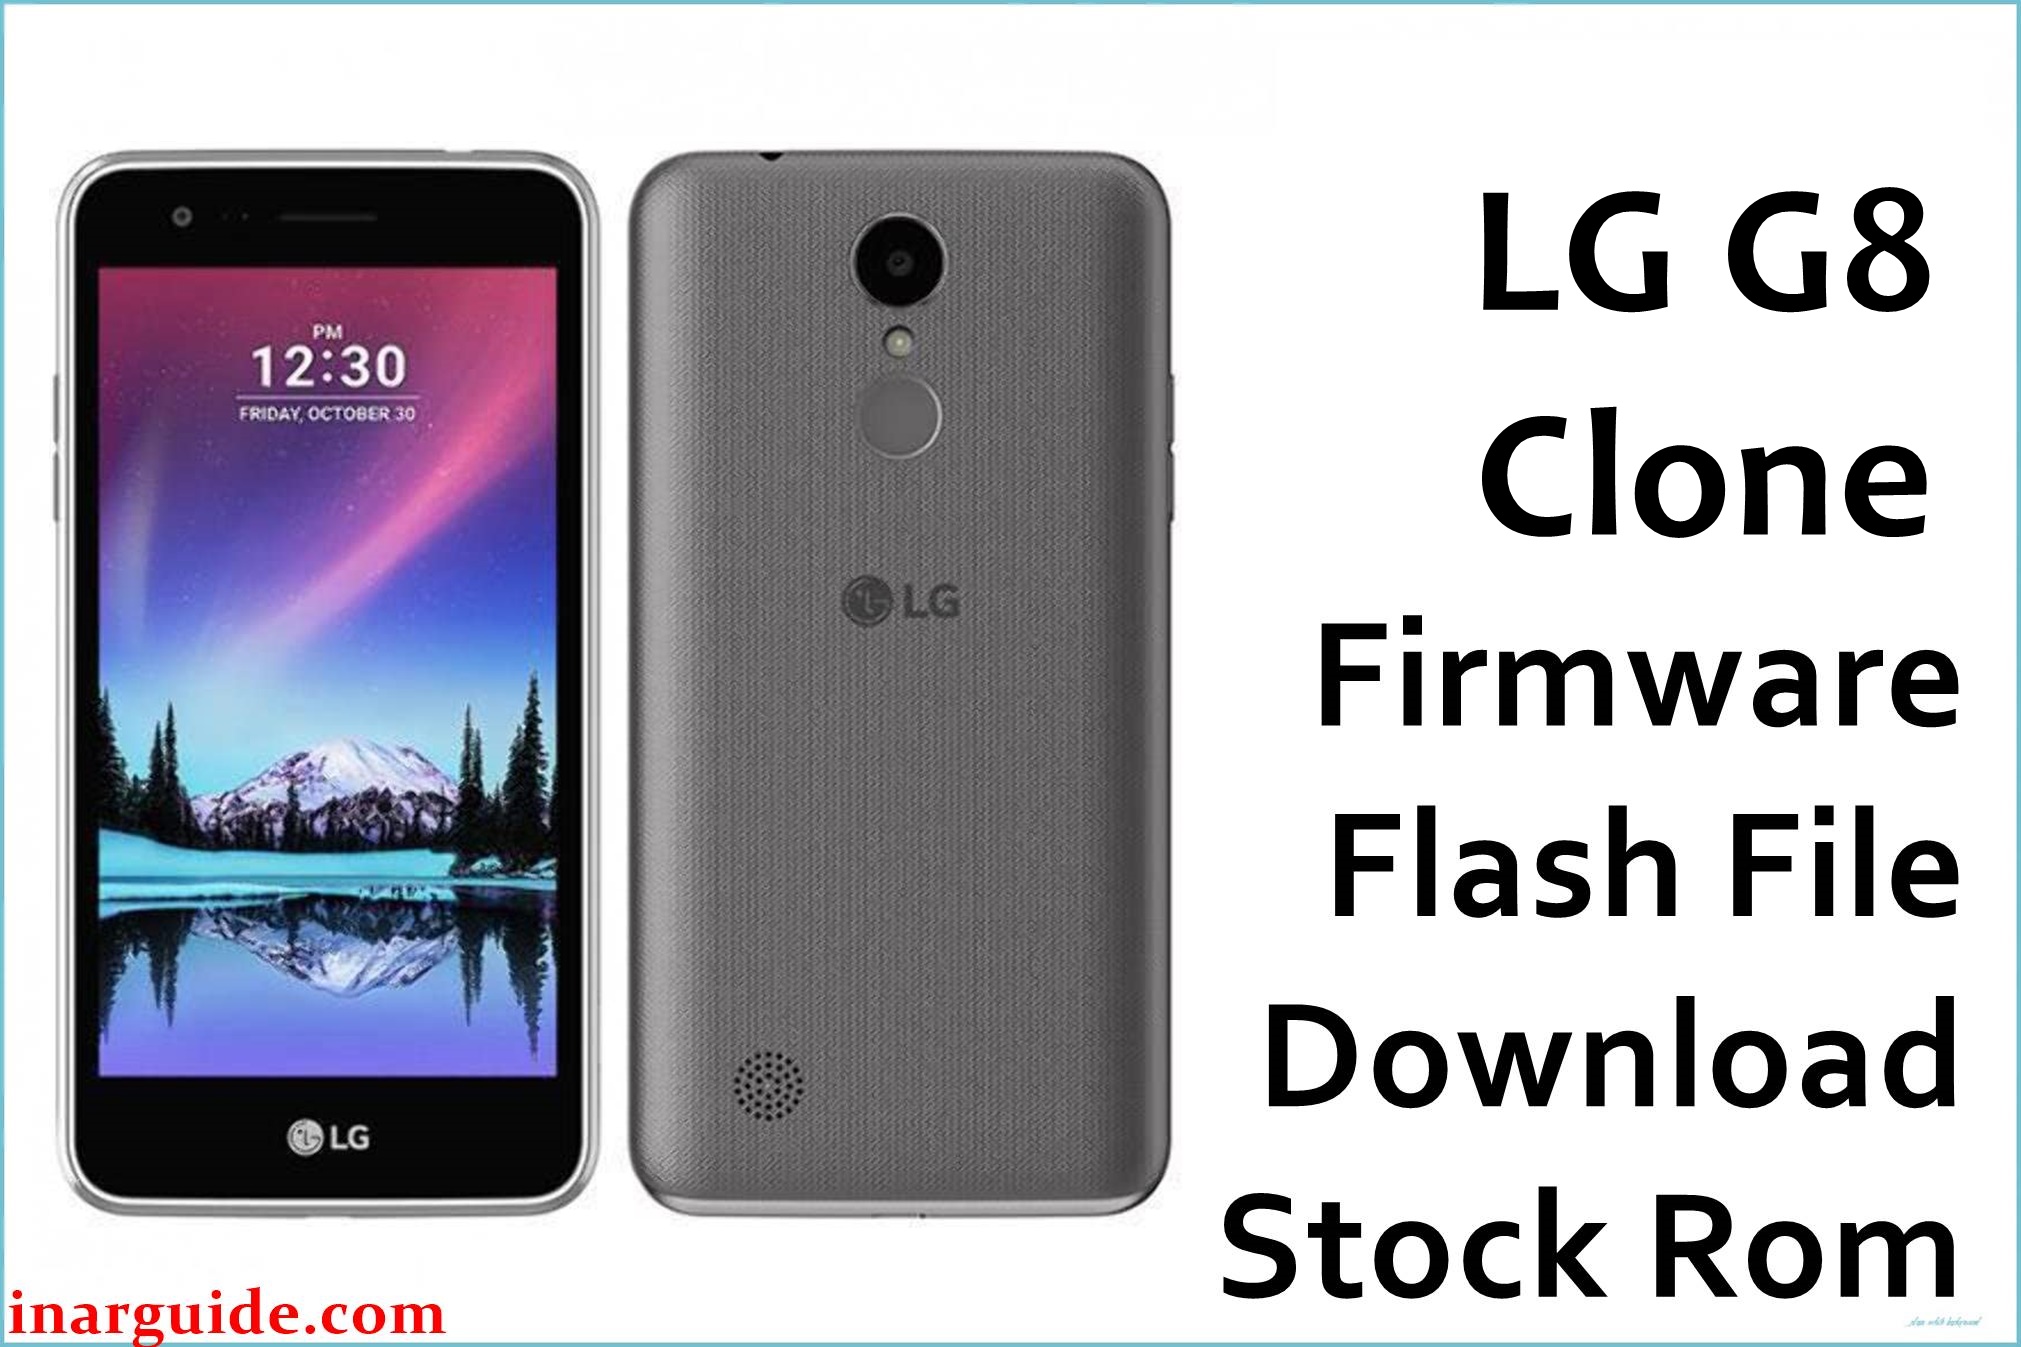 LG G8 Clone